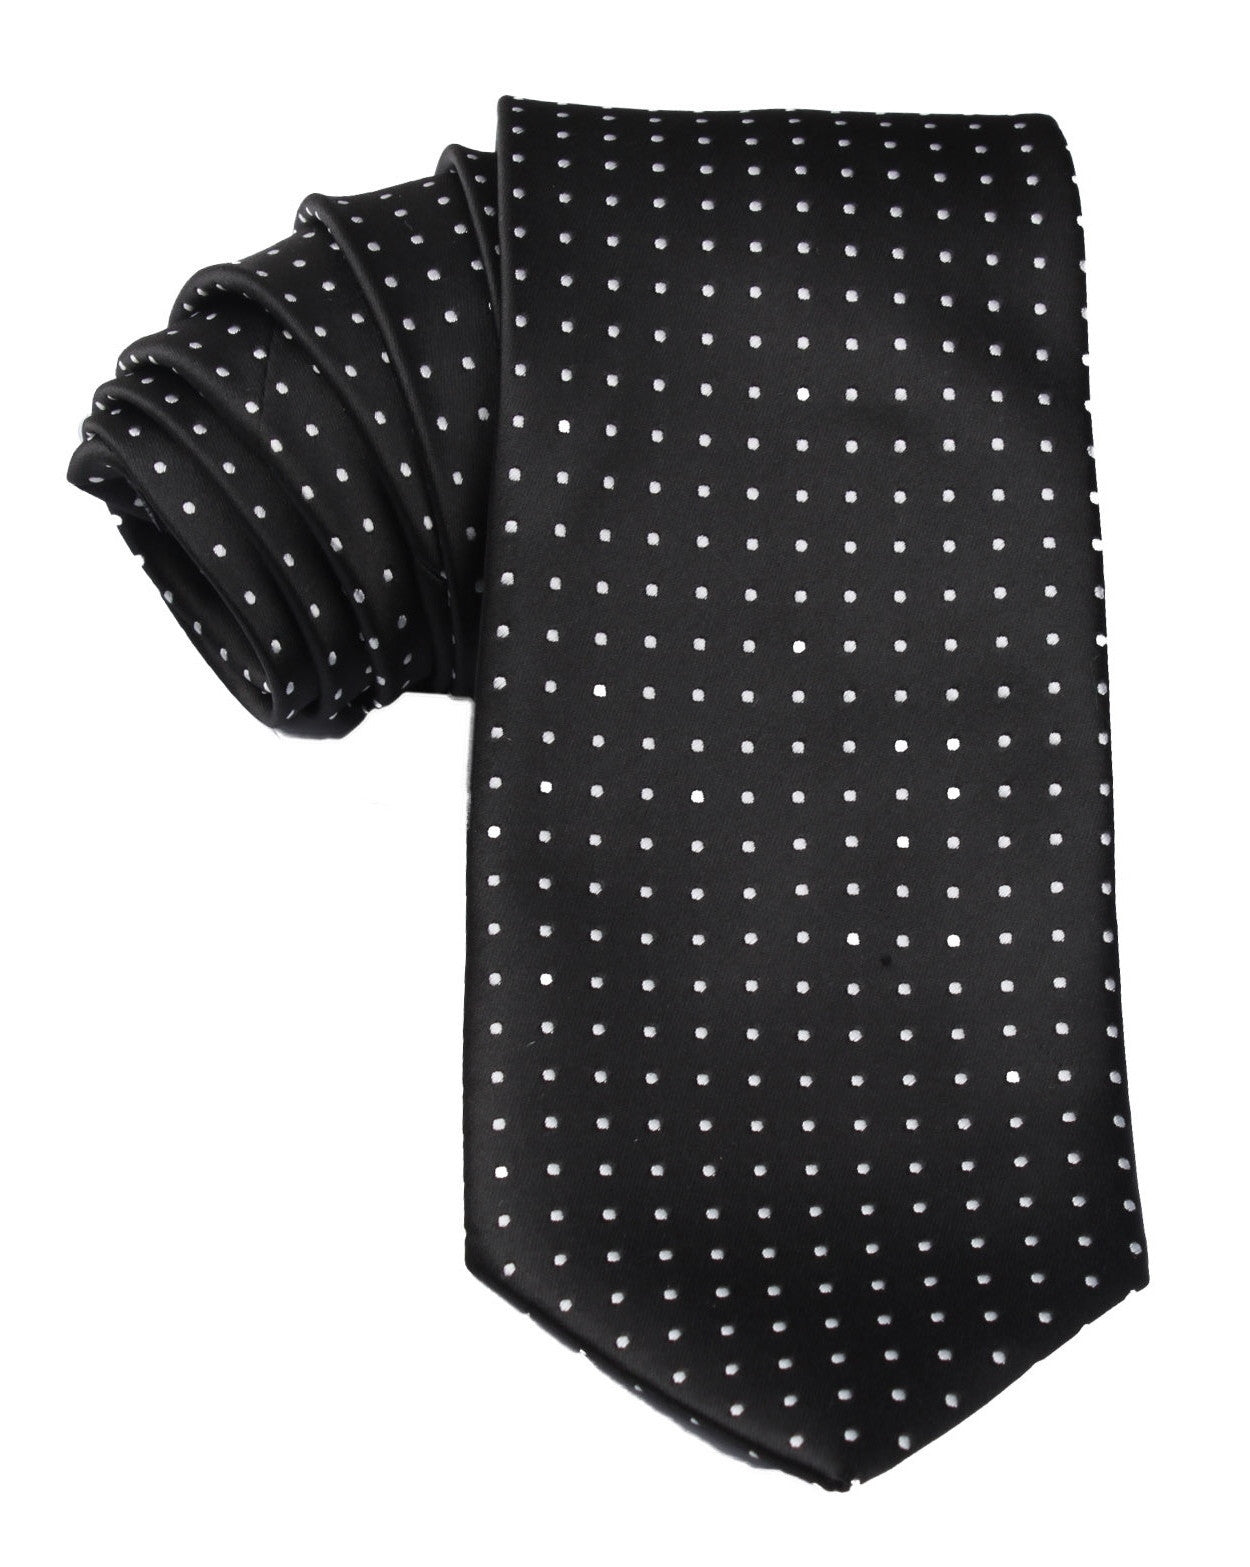 Black With Small White Polka Dots Tie | Luxury Ties | Men'S Neckties | Otaa